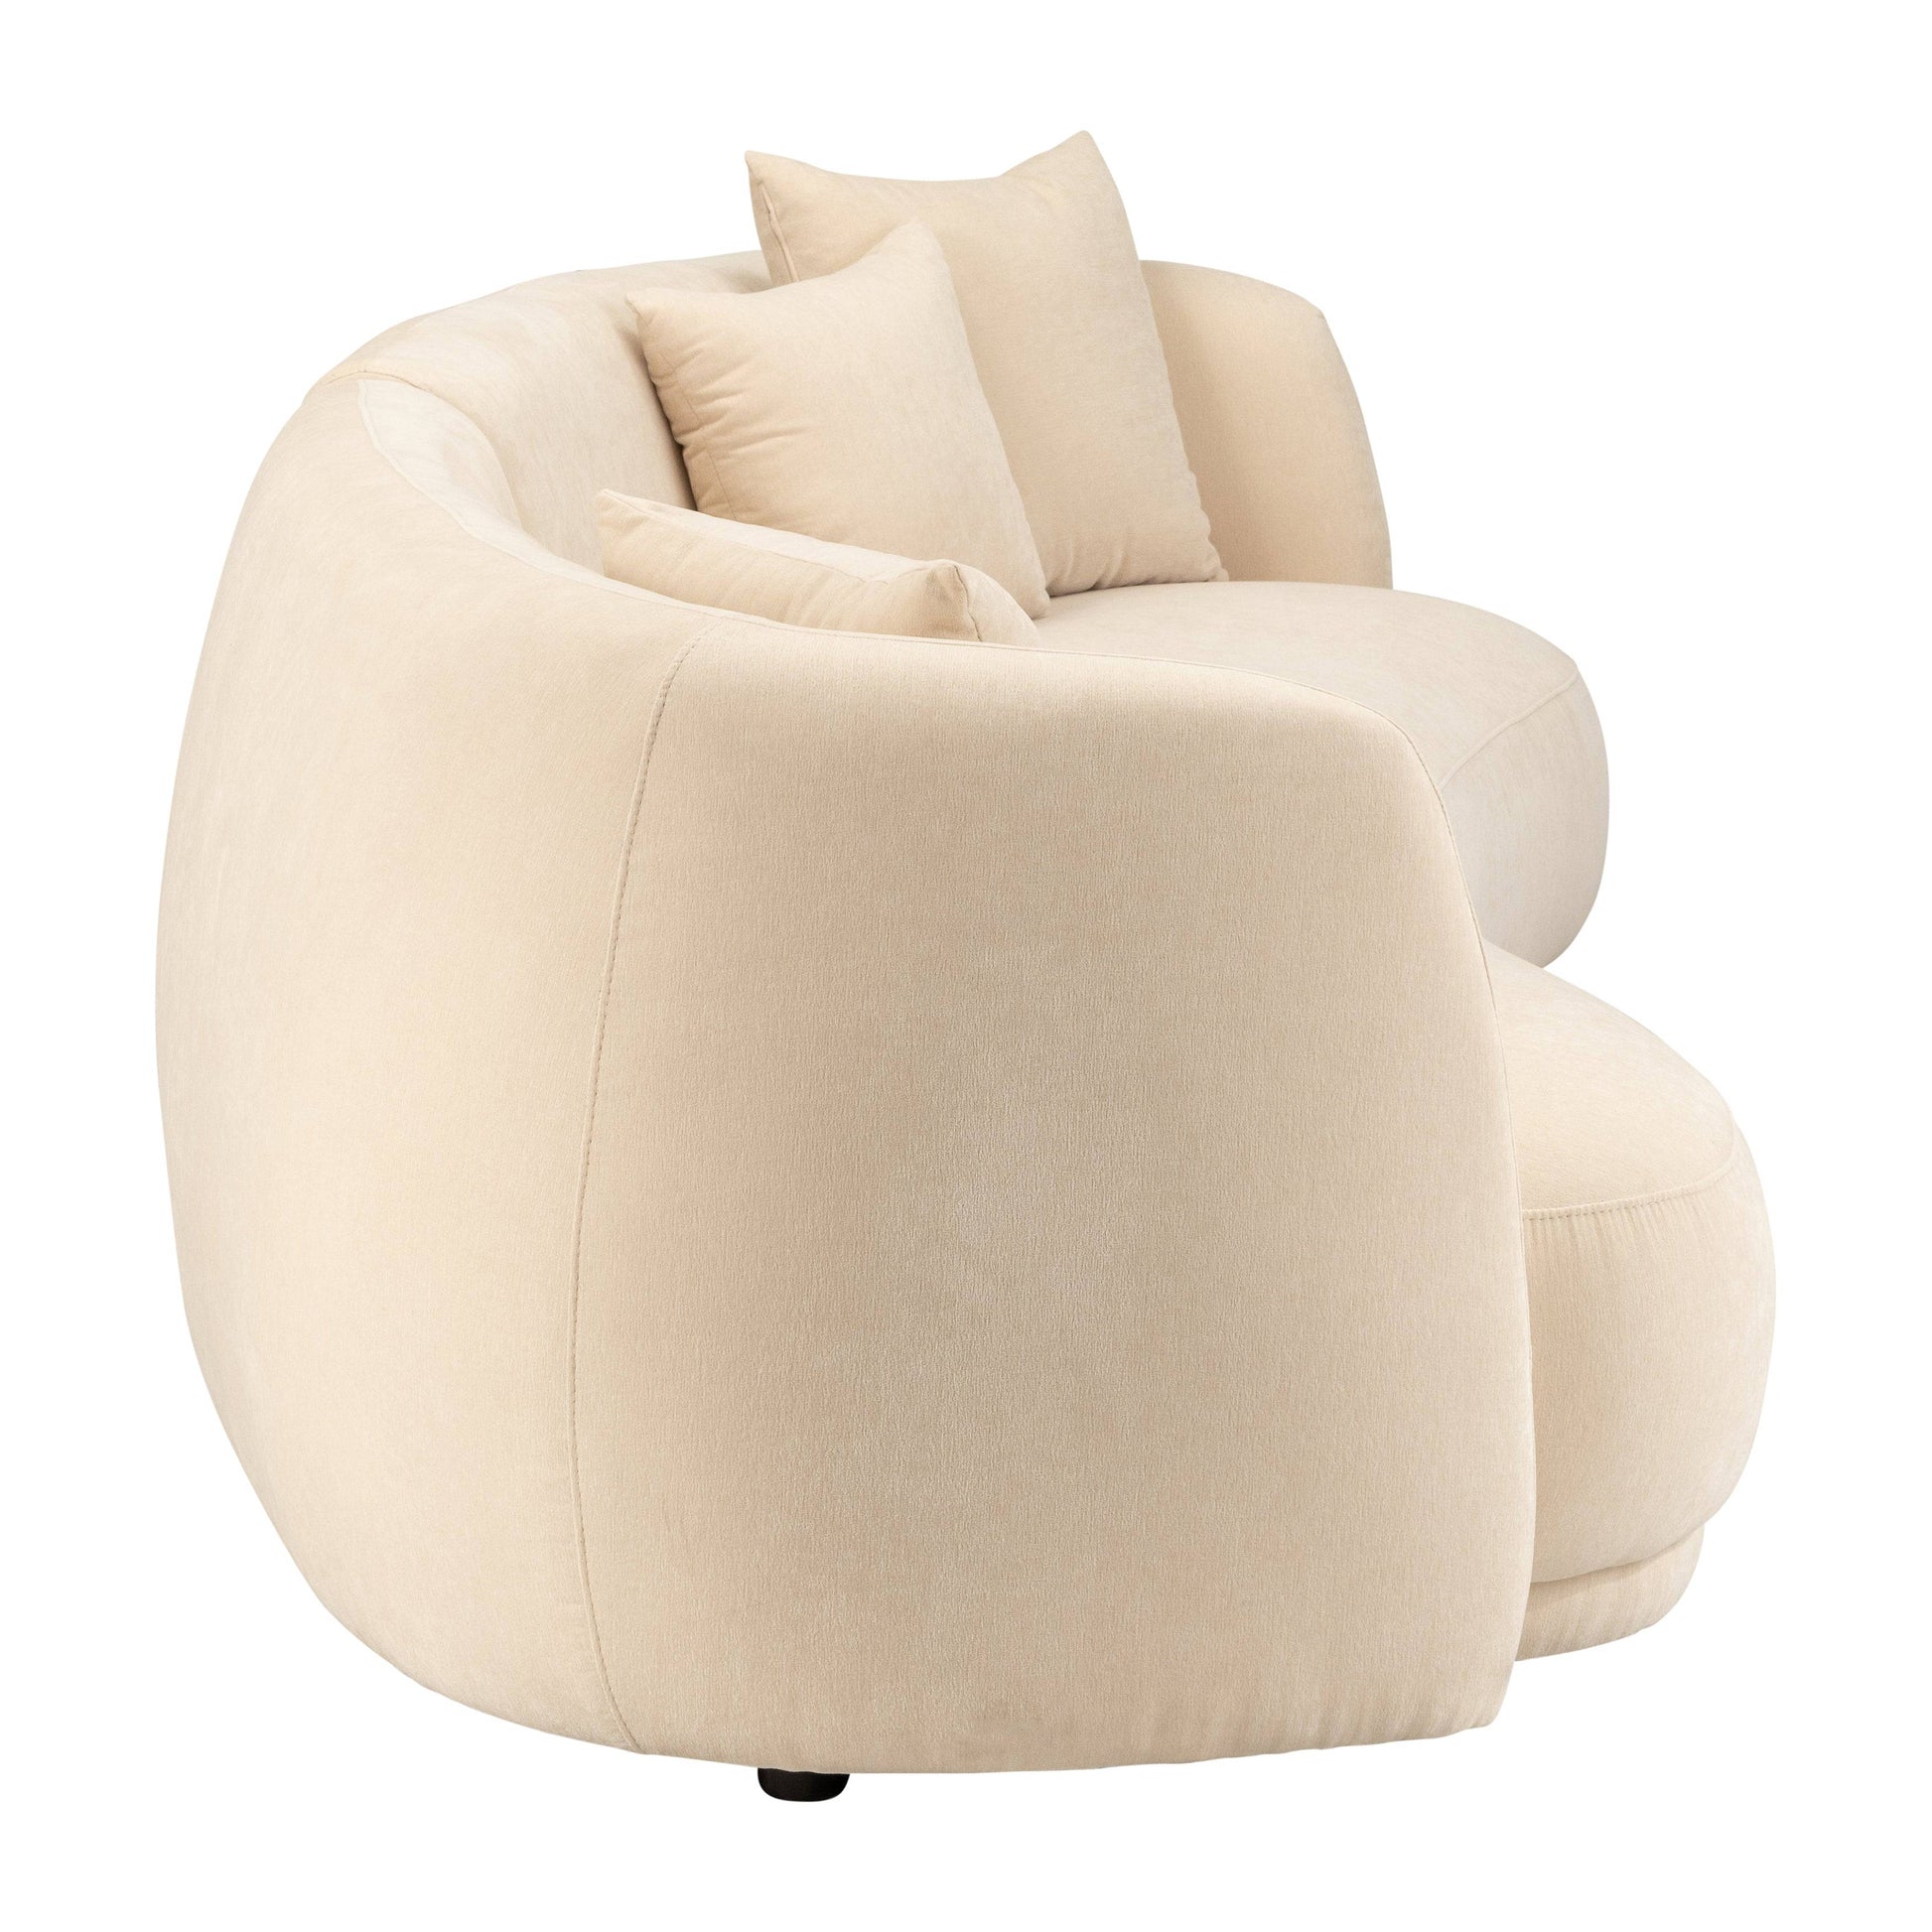 Anna 4-seat Curved Sofa - Elite Maison